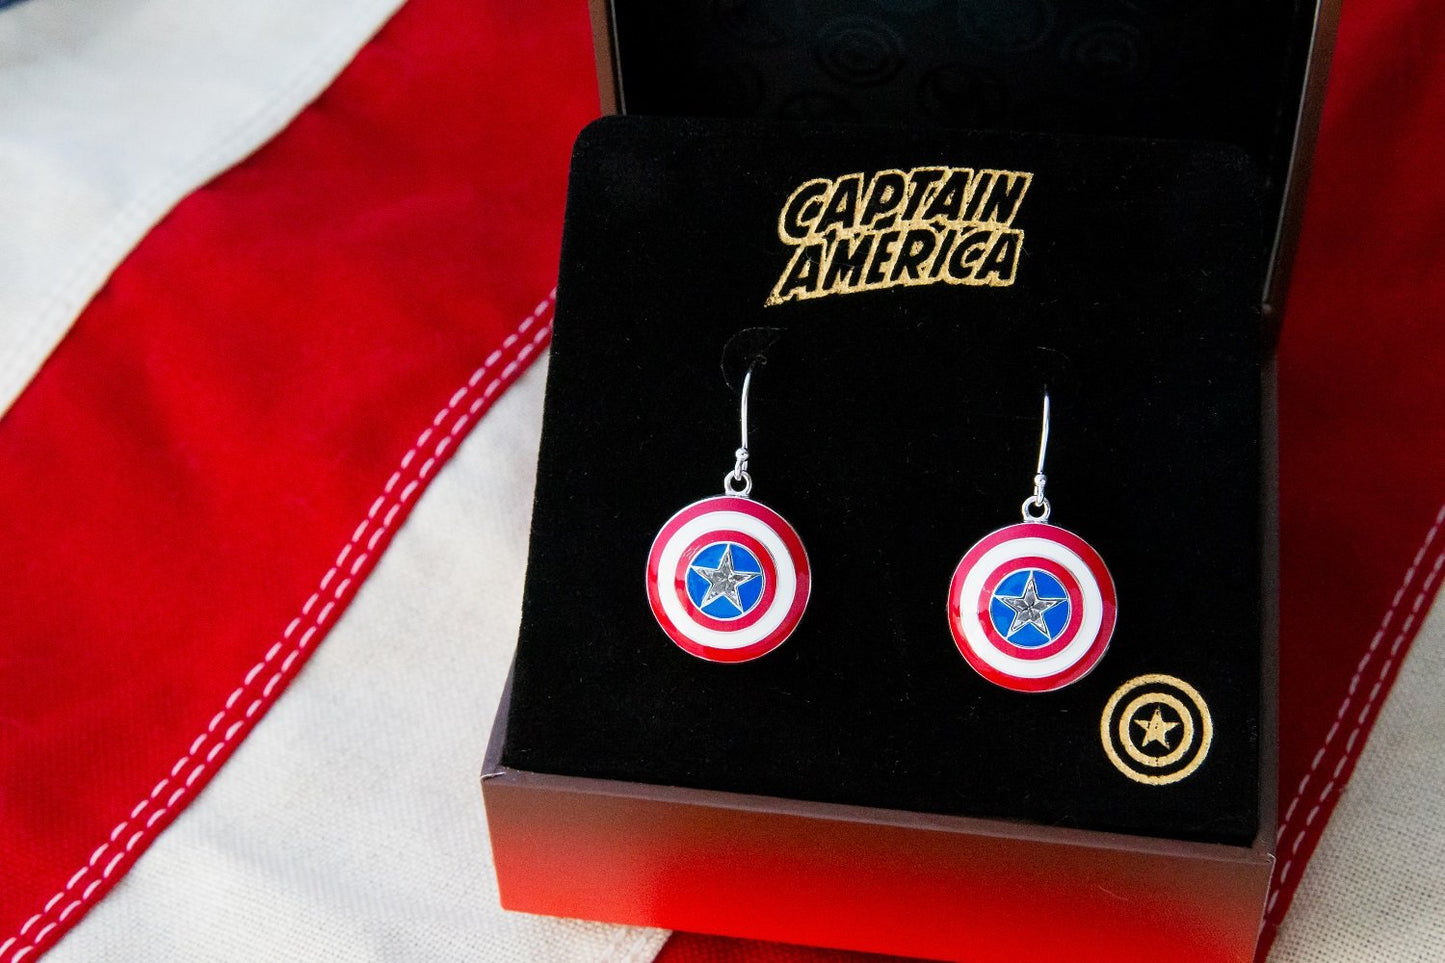 *Clearance!* Captain America Shield Hook Earrings by Marvel RockLove